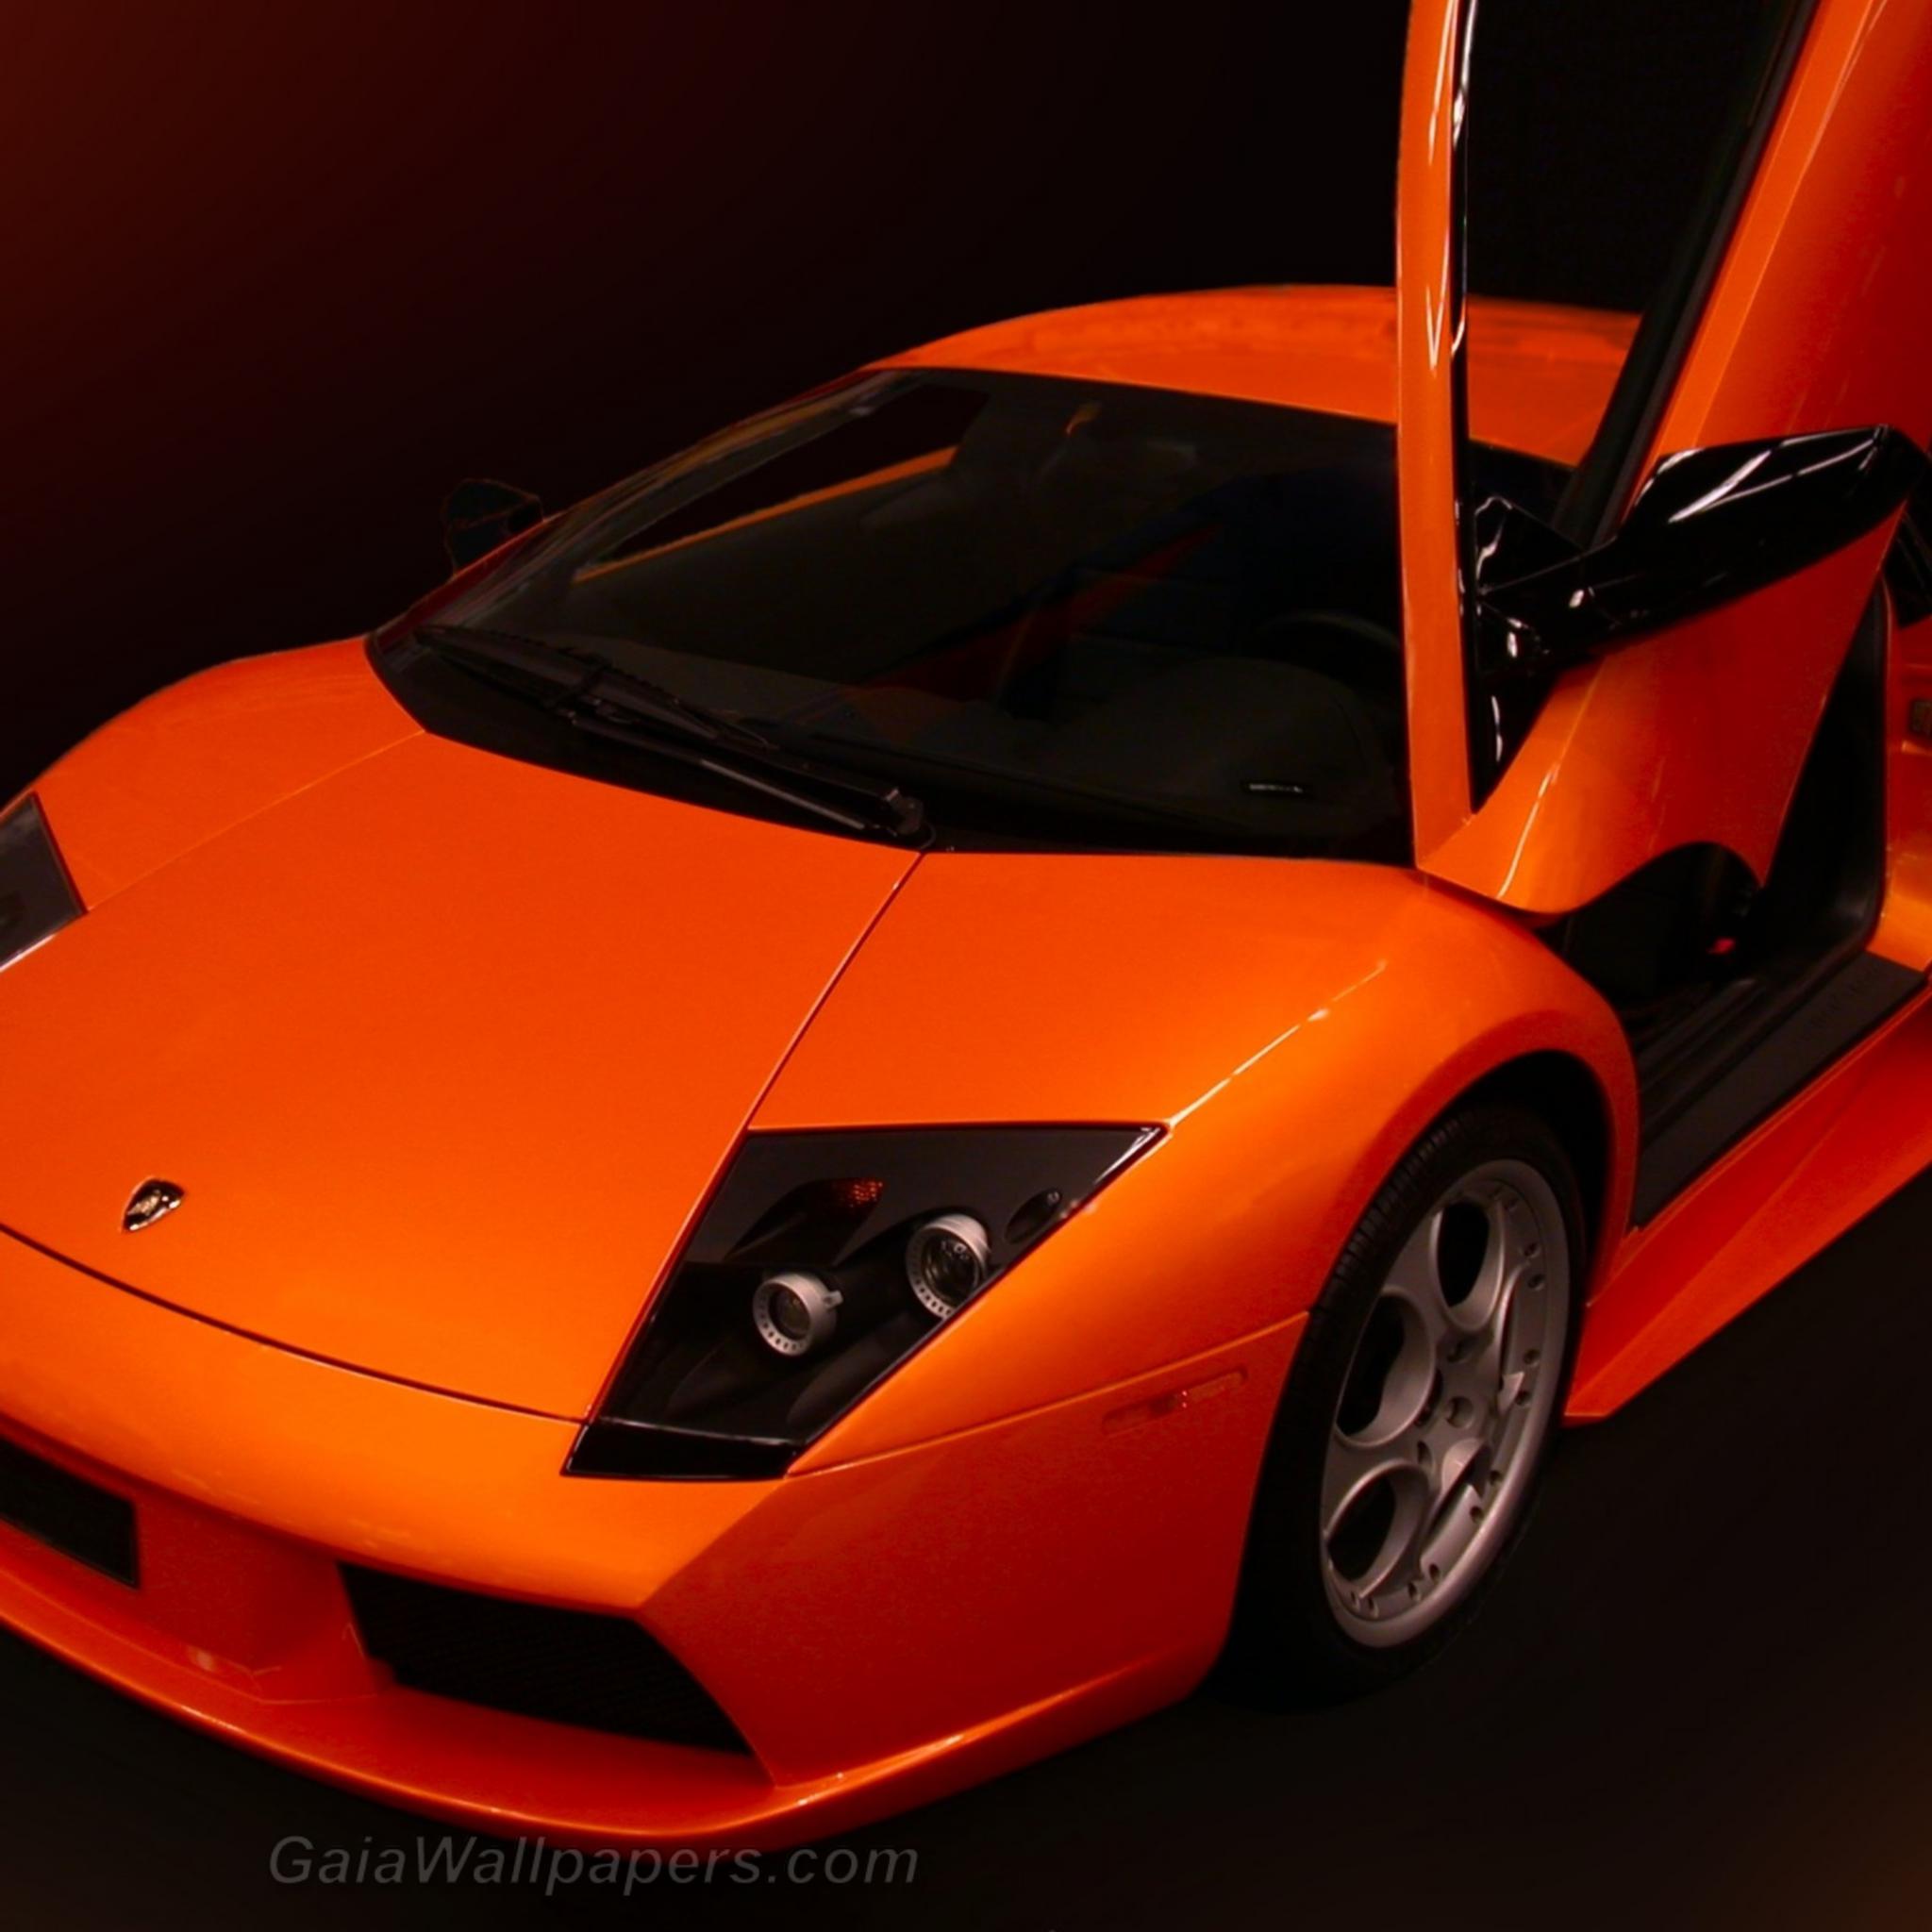 Lamborghini Murciélago - Fonds d'écran gratuits